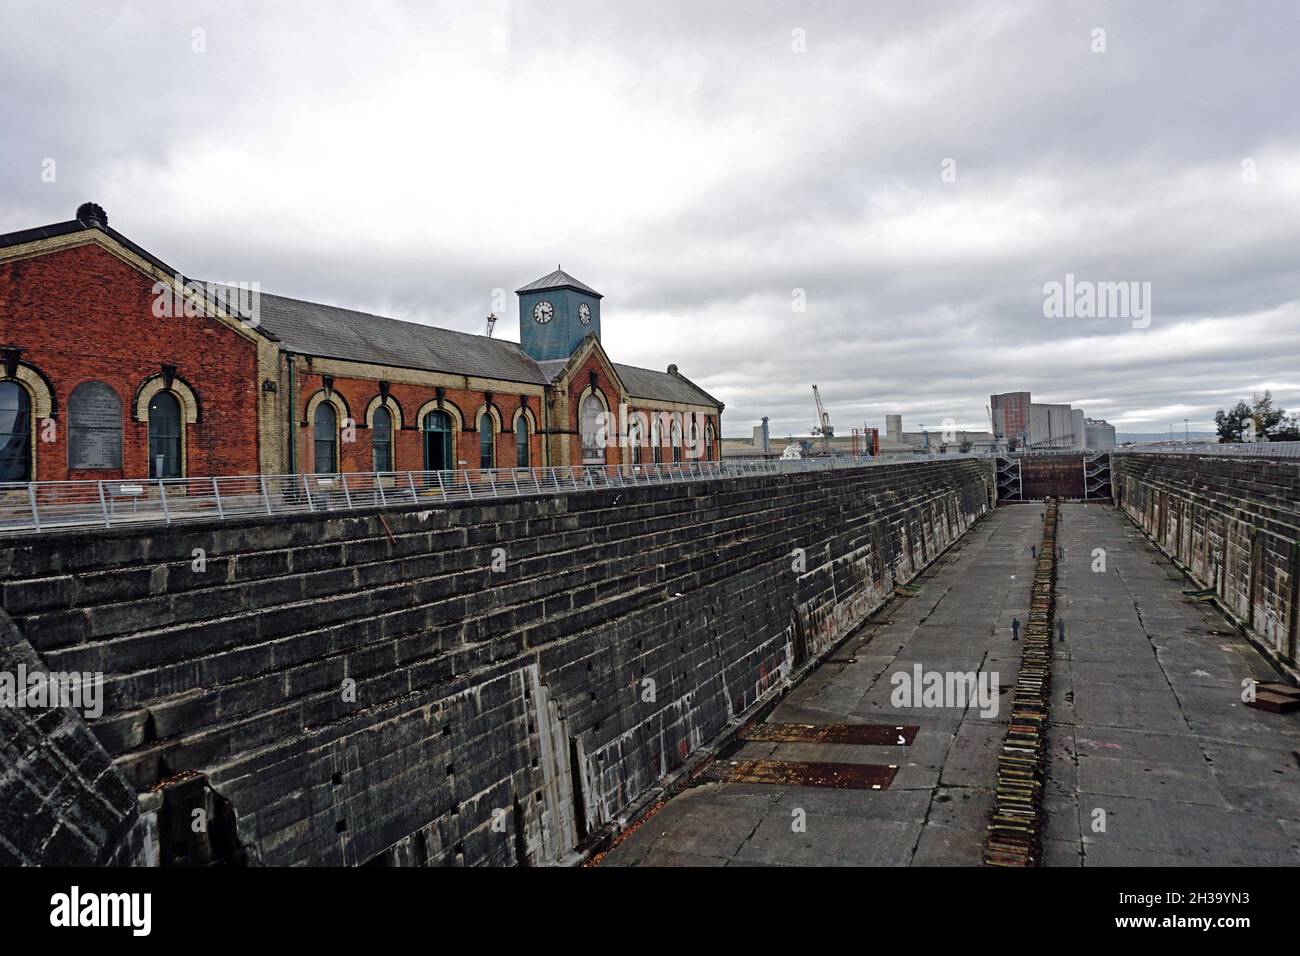 Titanic dry dock and pump house building. October 2018, Belfast, Northern Ireland Stock Photo